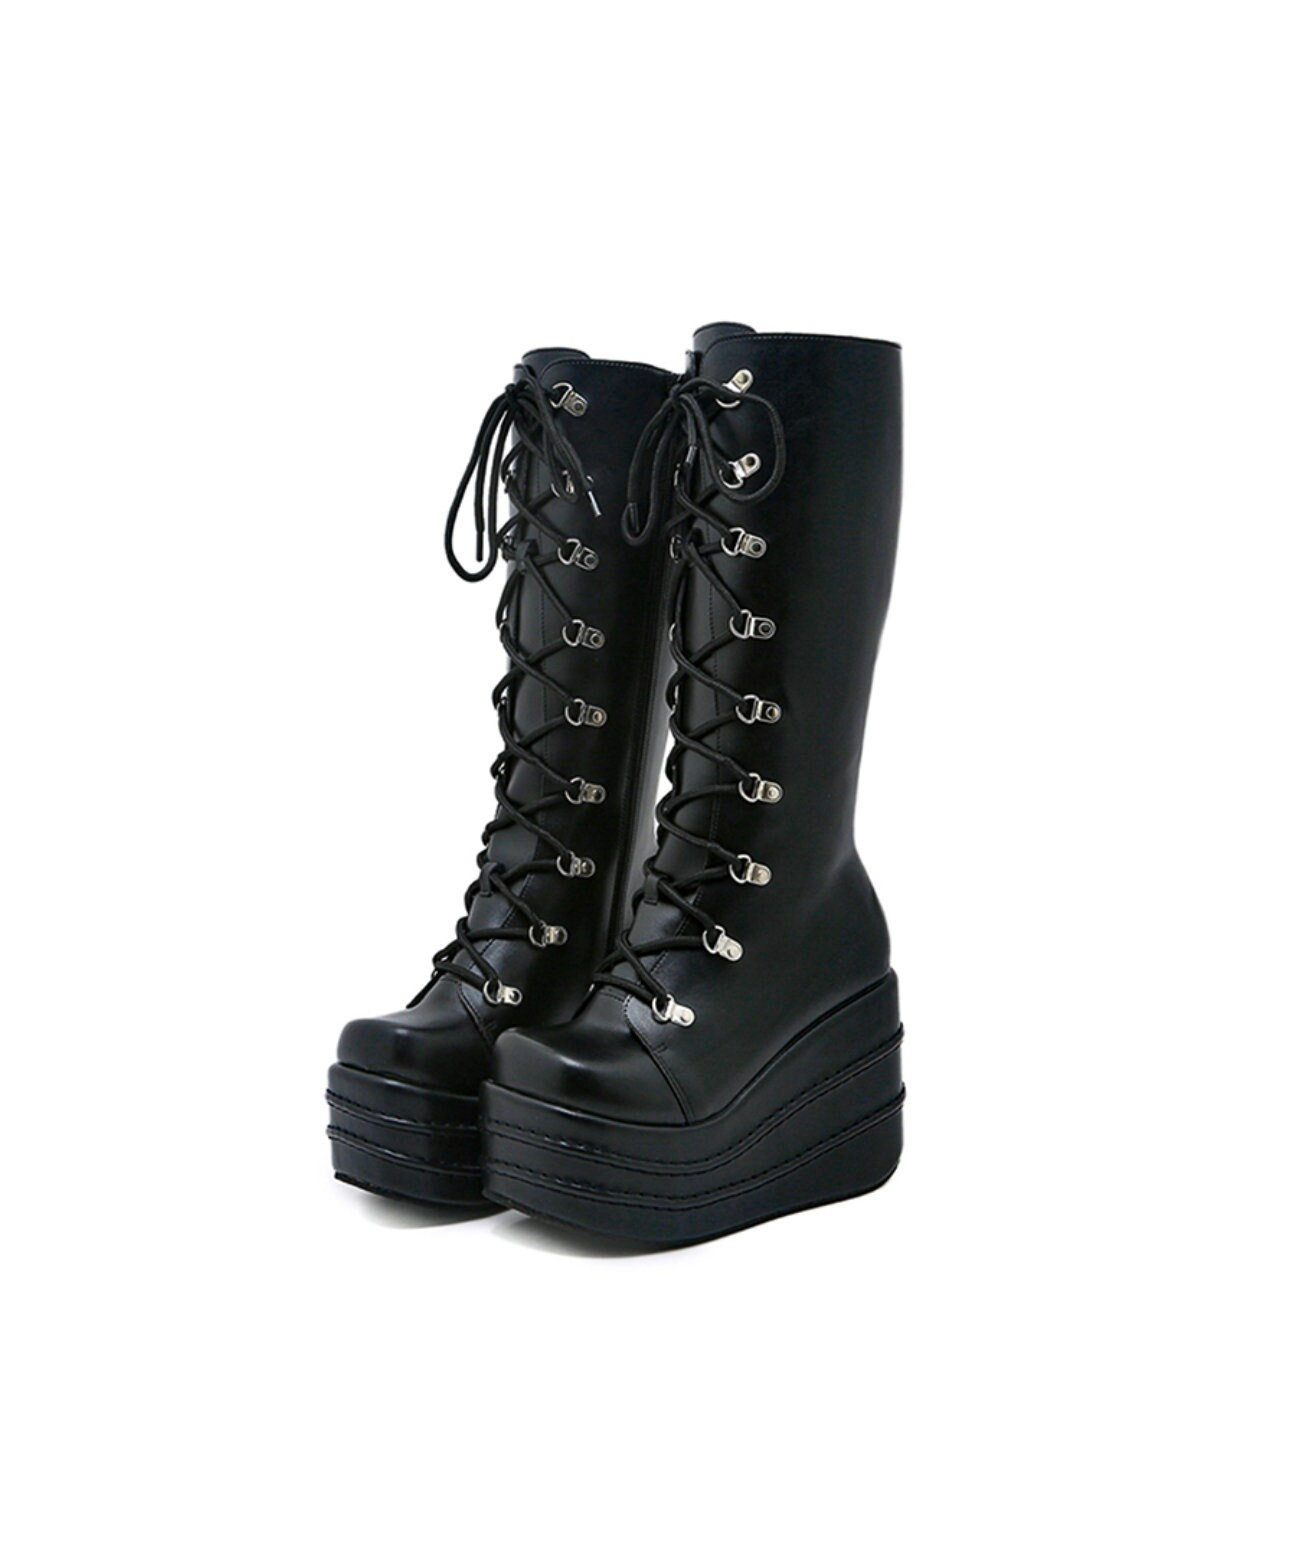 Black Emo Wedge High Heel Gothic Demoni Platform Boots